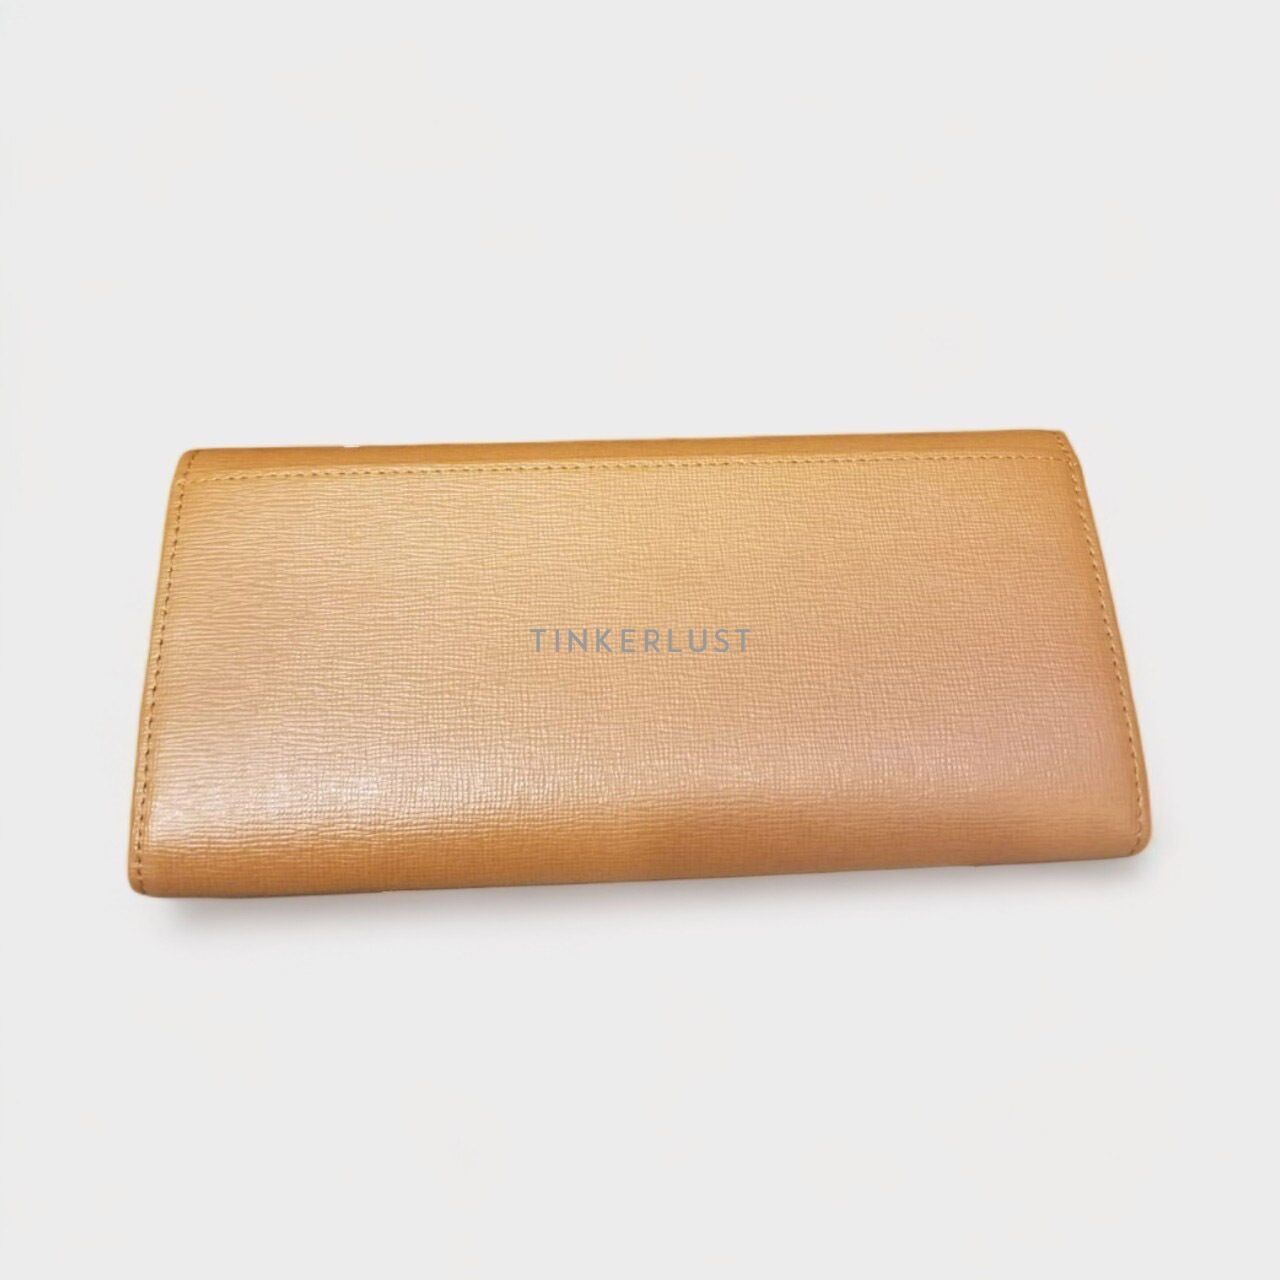 Furla Bifold Continental Tan Leather Wallet